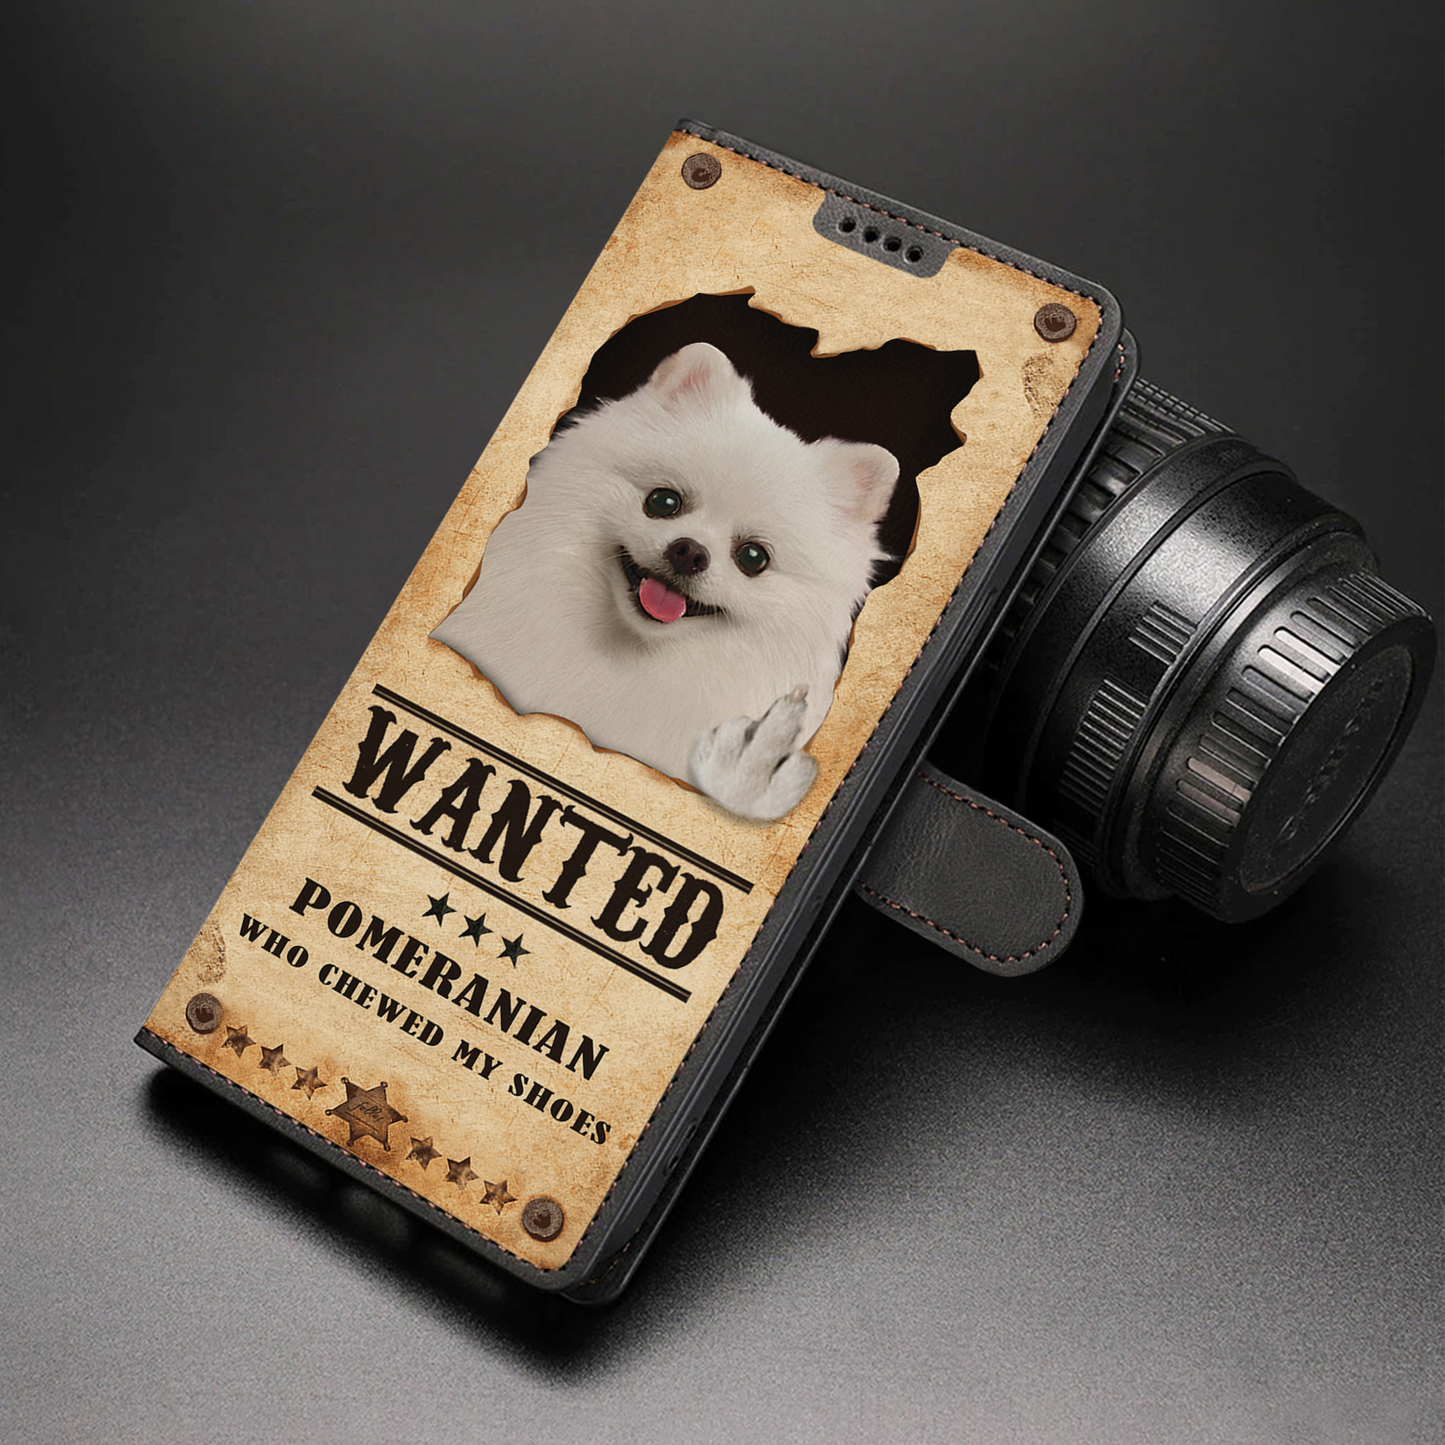 Pomeranian Wanted - Fun Wallet Phone Case V2